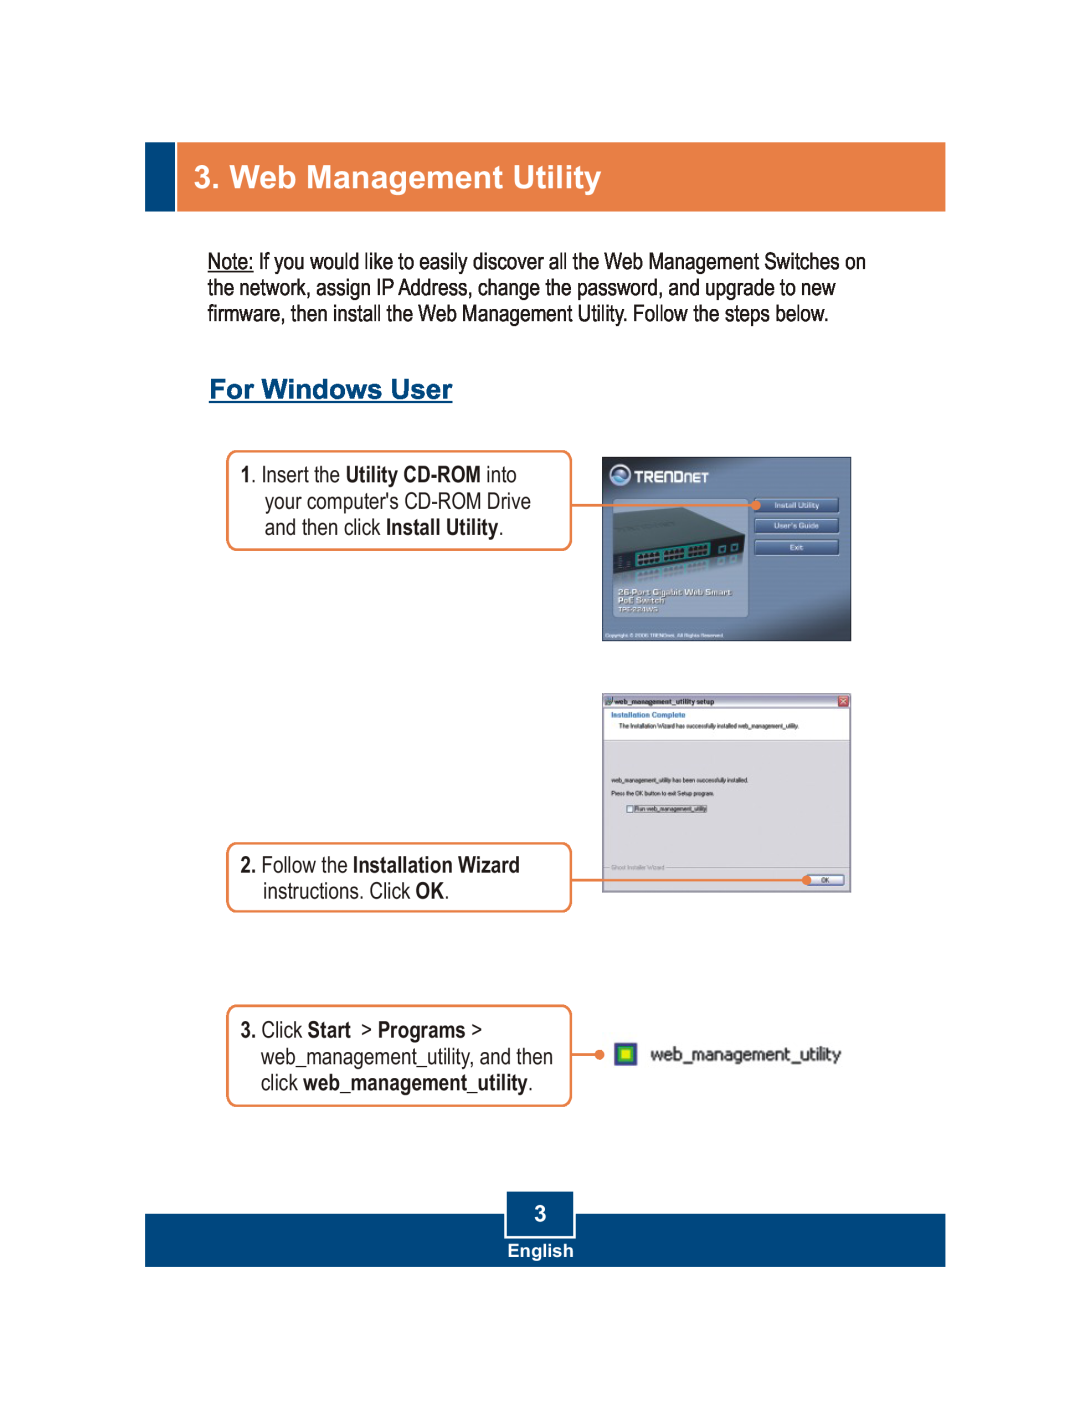 TRENDnet Utility CD-ROM, TPE-224WS manual Web Management Utility, For Windows User, Click Start Programs, English 